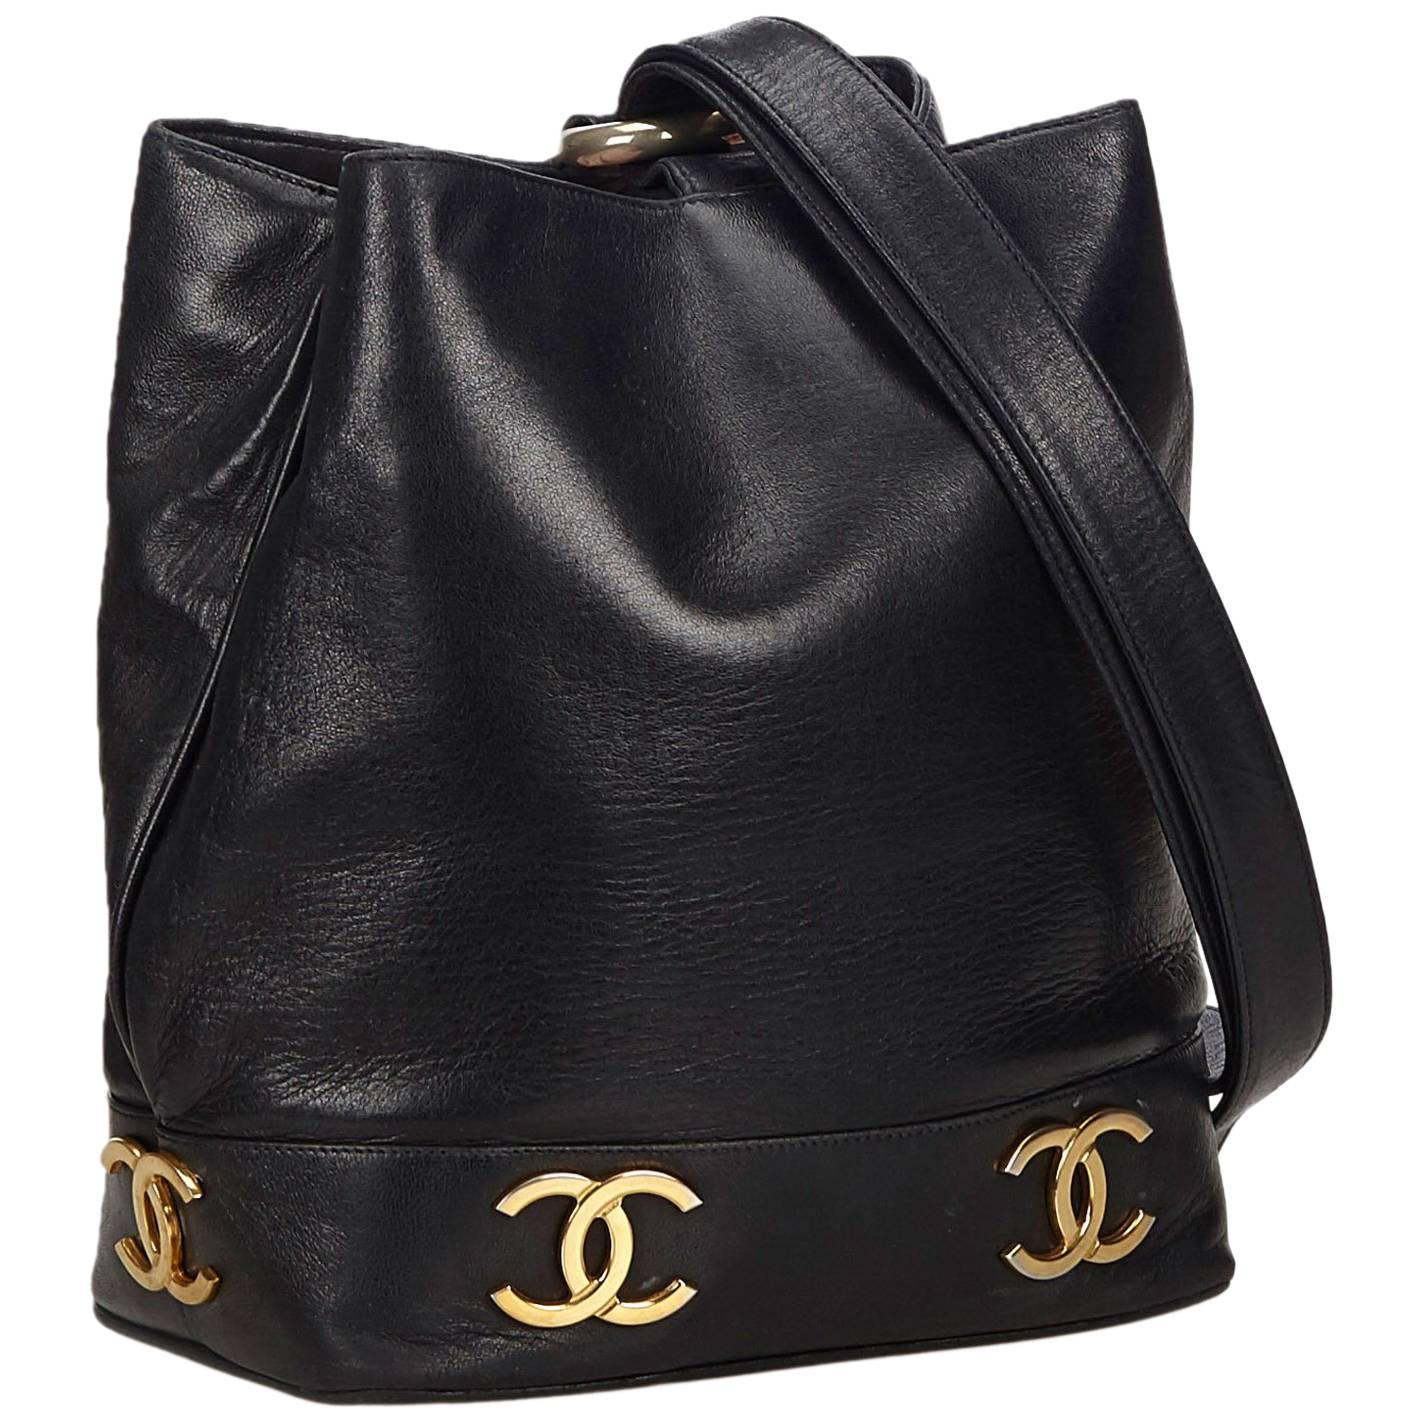 Chanel Black Lambskin Leather Gold Toned "CC" Bucket Bag